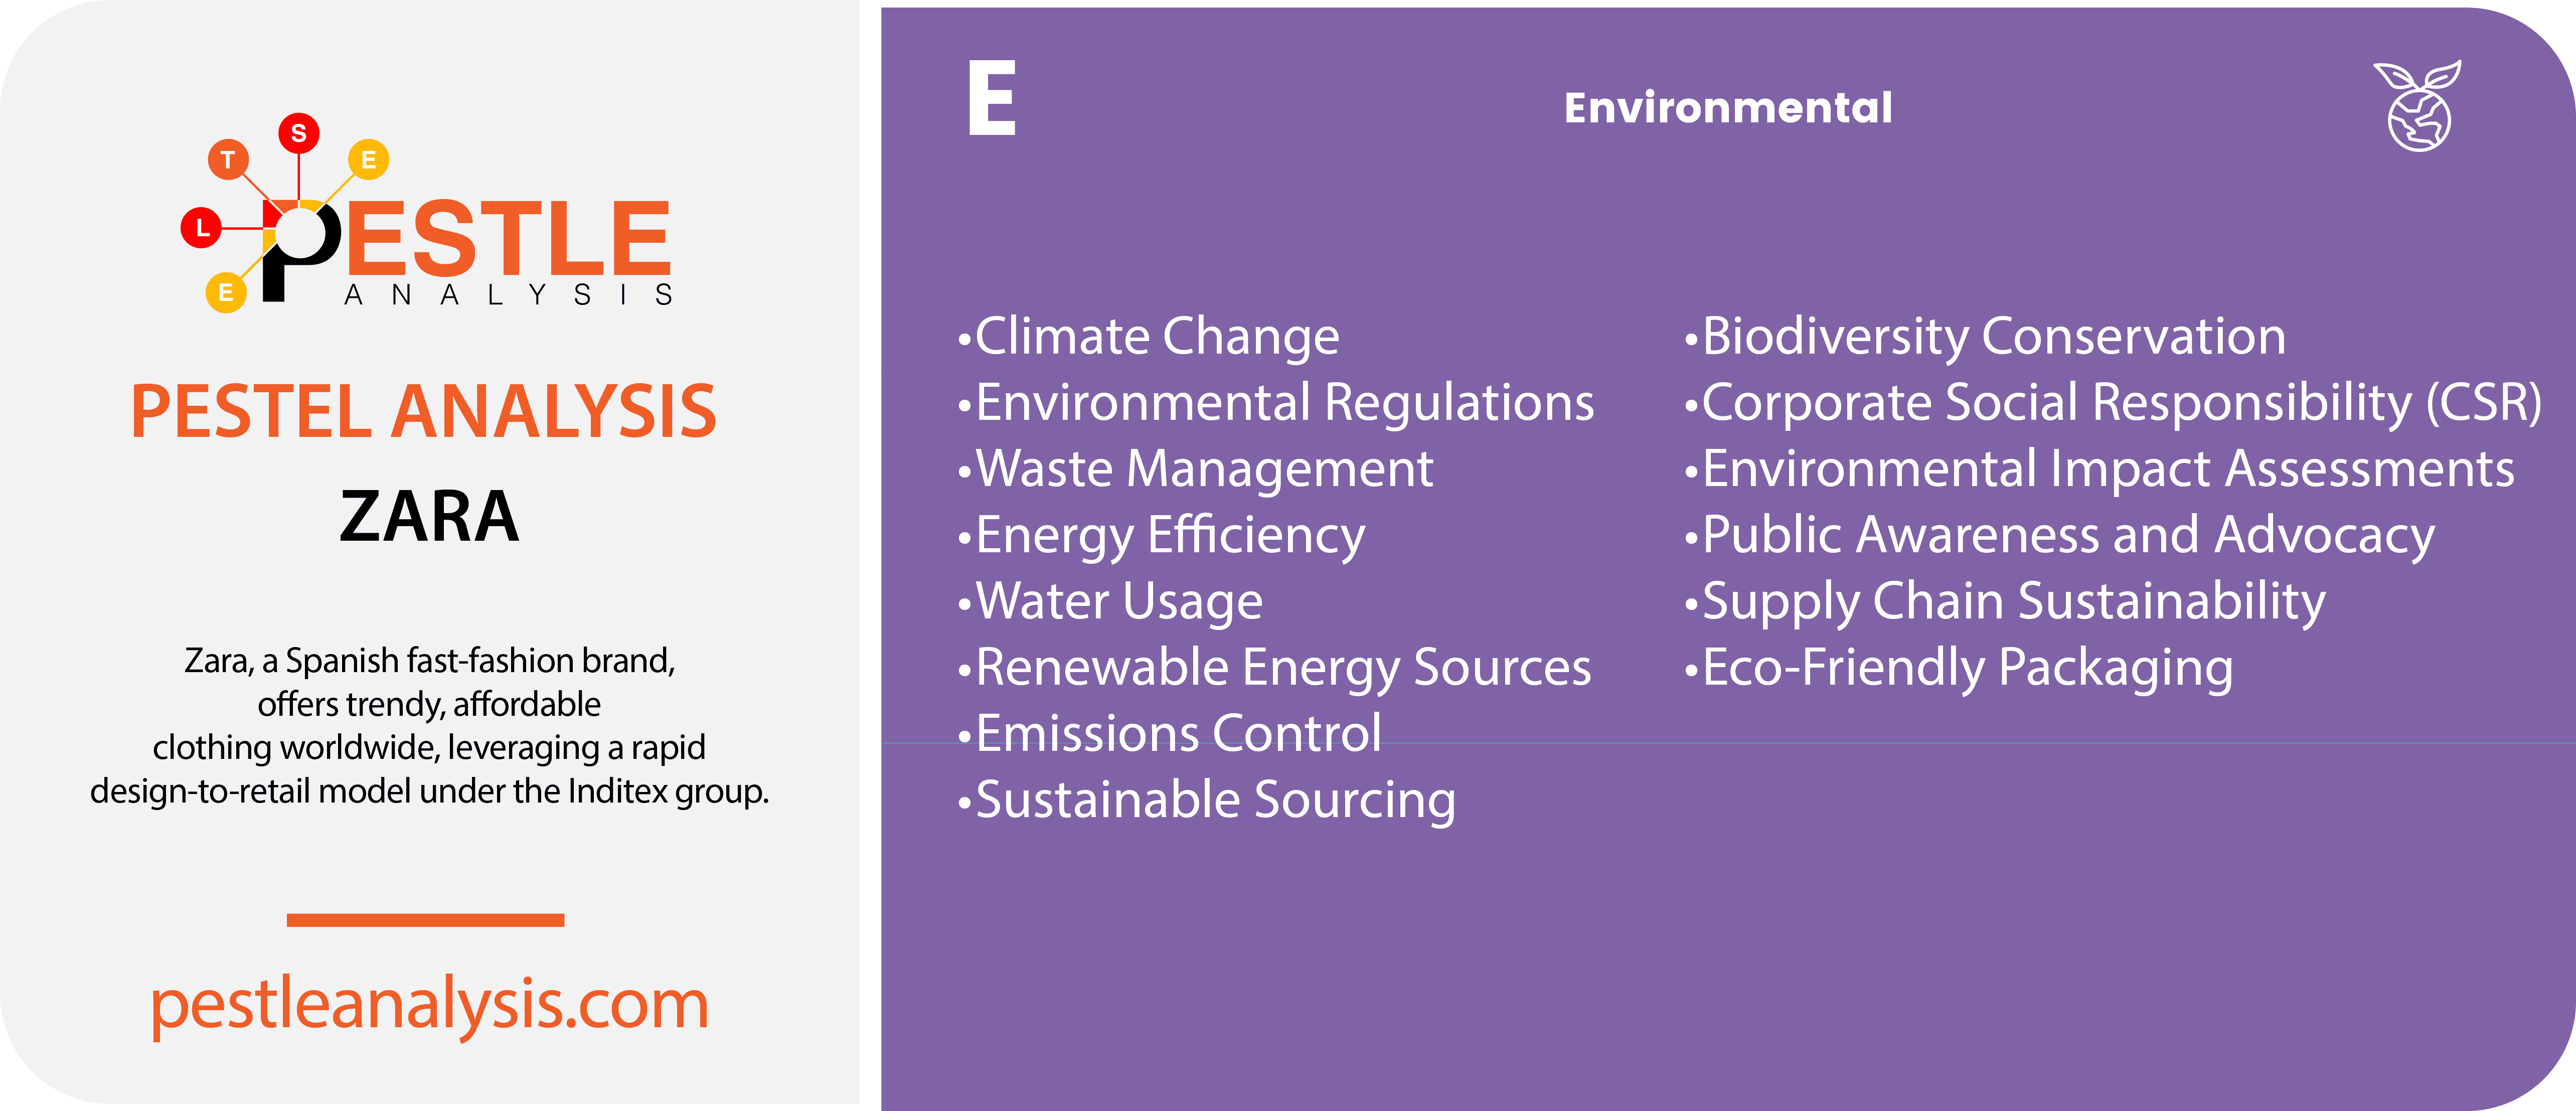 zara-pestle-analysis-environmental-factors-template